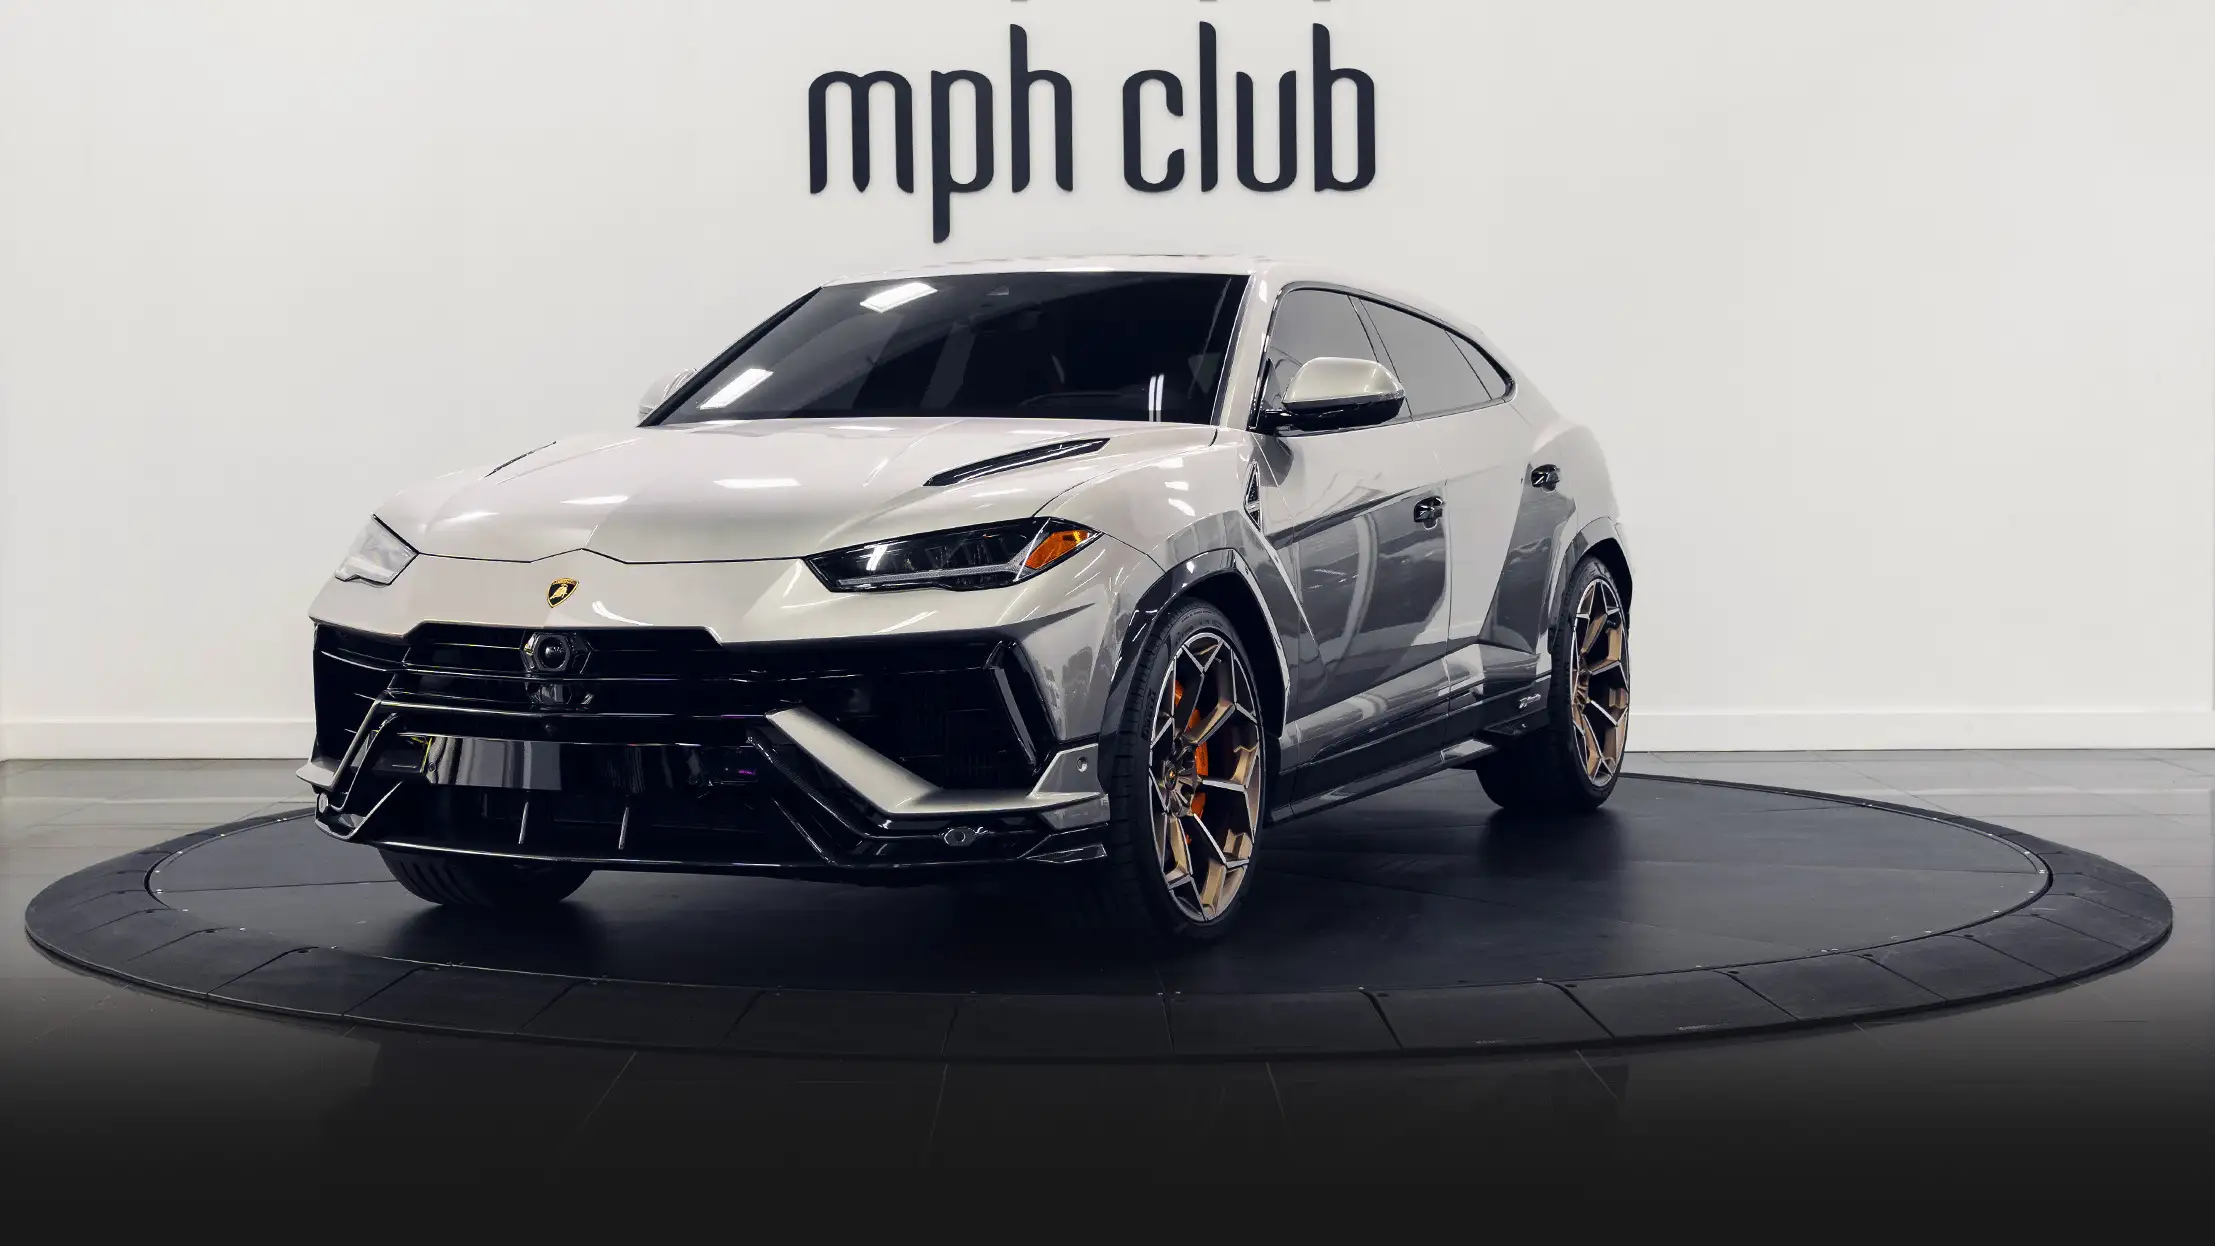 Grey Lamborghini Urus Performante rental profile view mph club